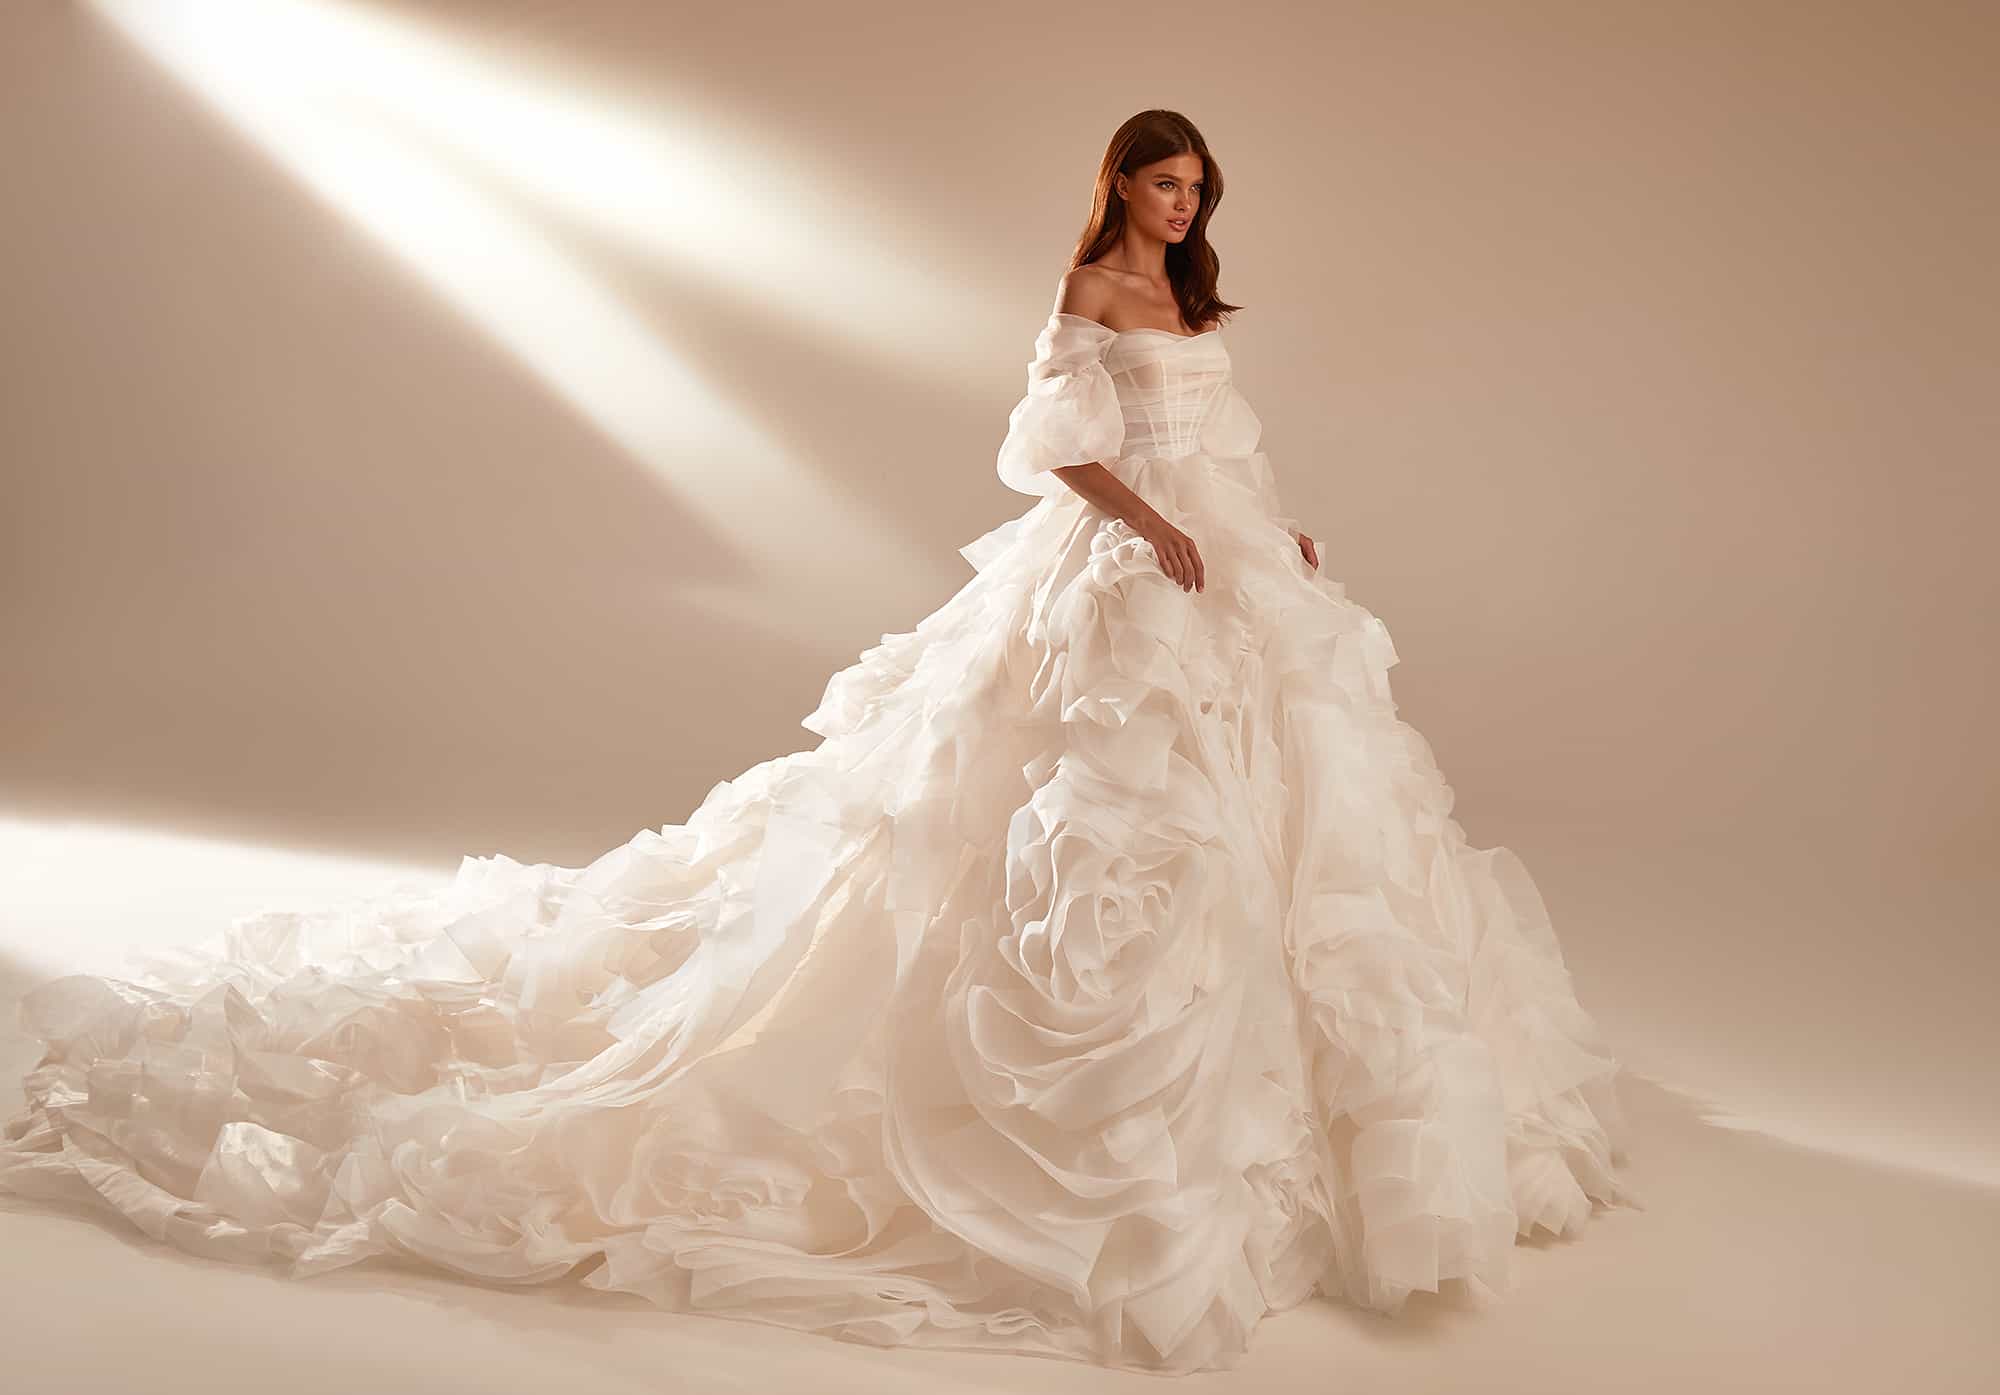 80+ Best Wedding Dresses Fall 2019 - Top Autumn Bridal Runway Looks